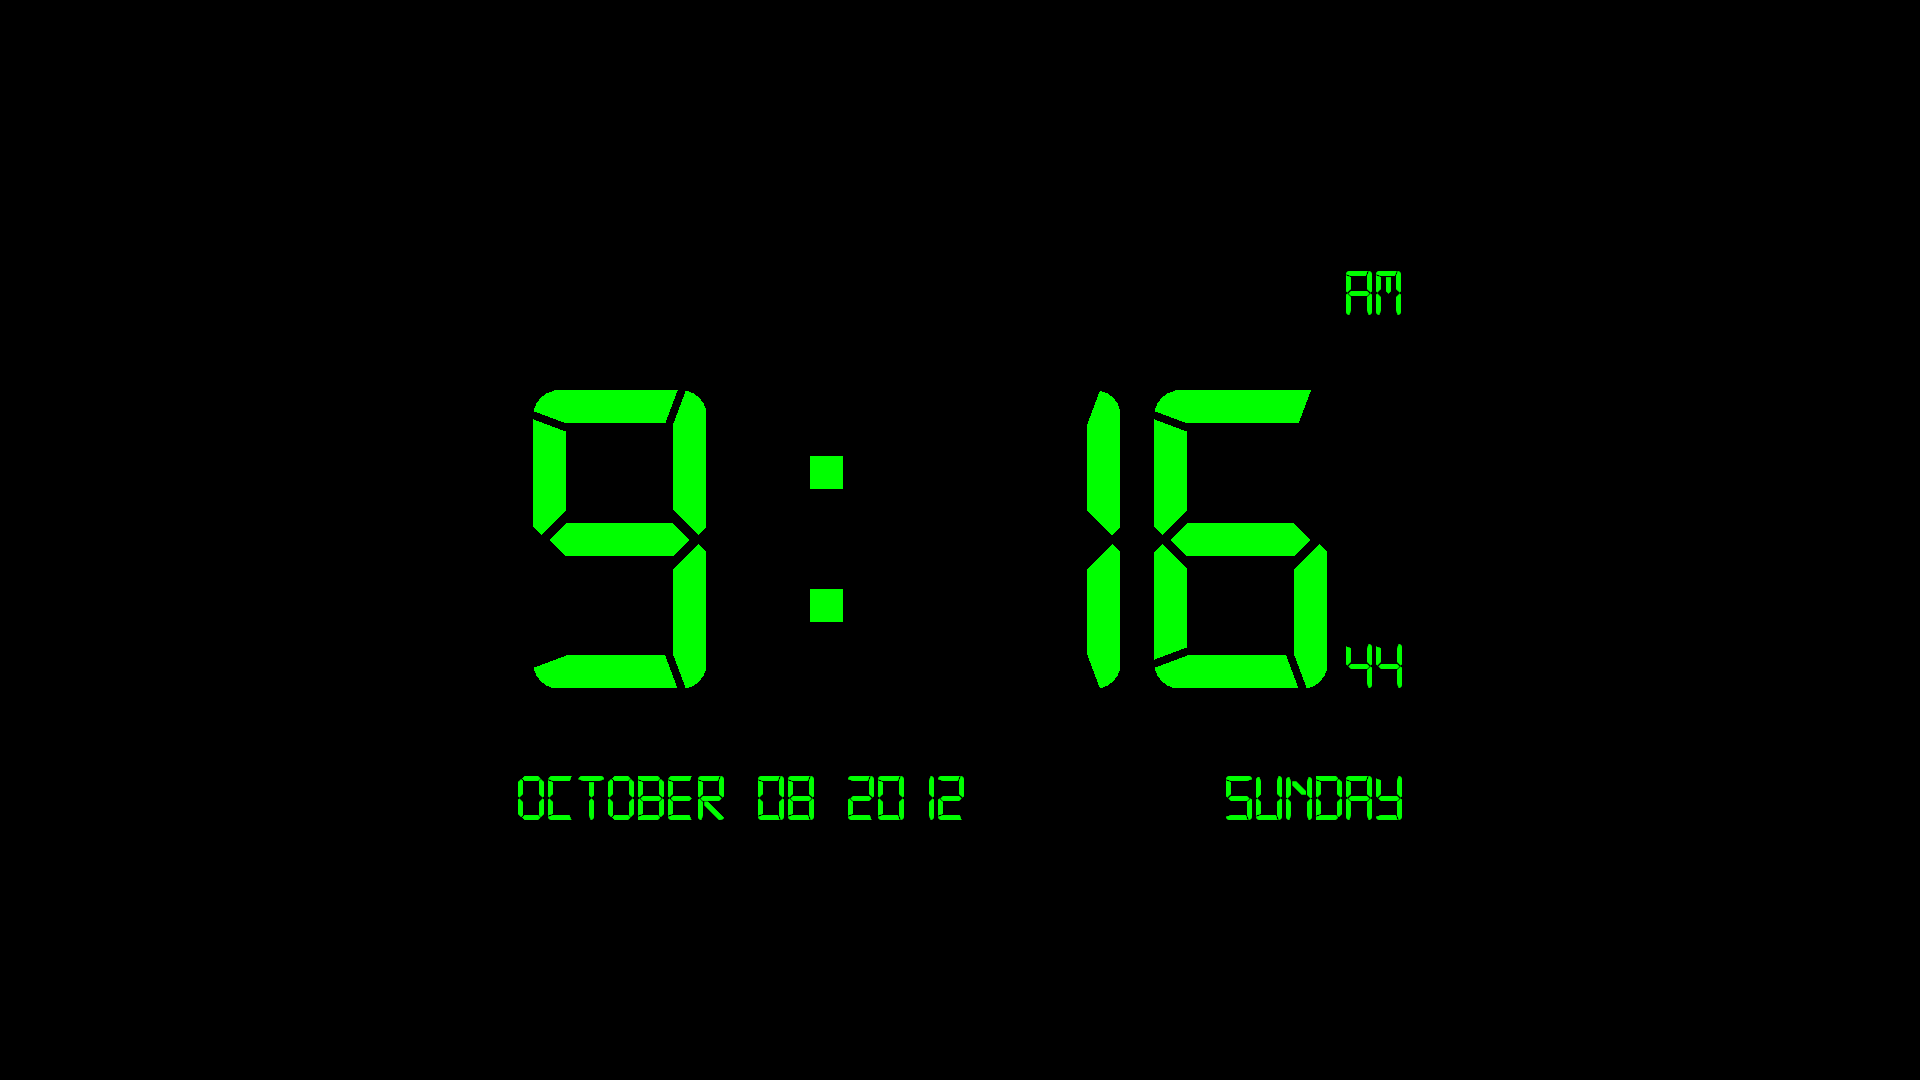 Download Led Digital Clock- Smart Clock Free for Android - Led Digital Clock-  Smart Clock APK Download - STEPrimo.com